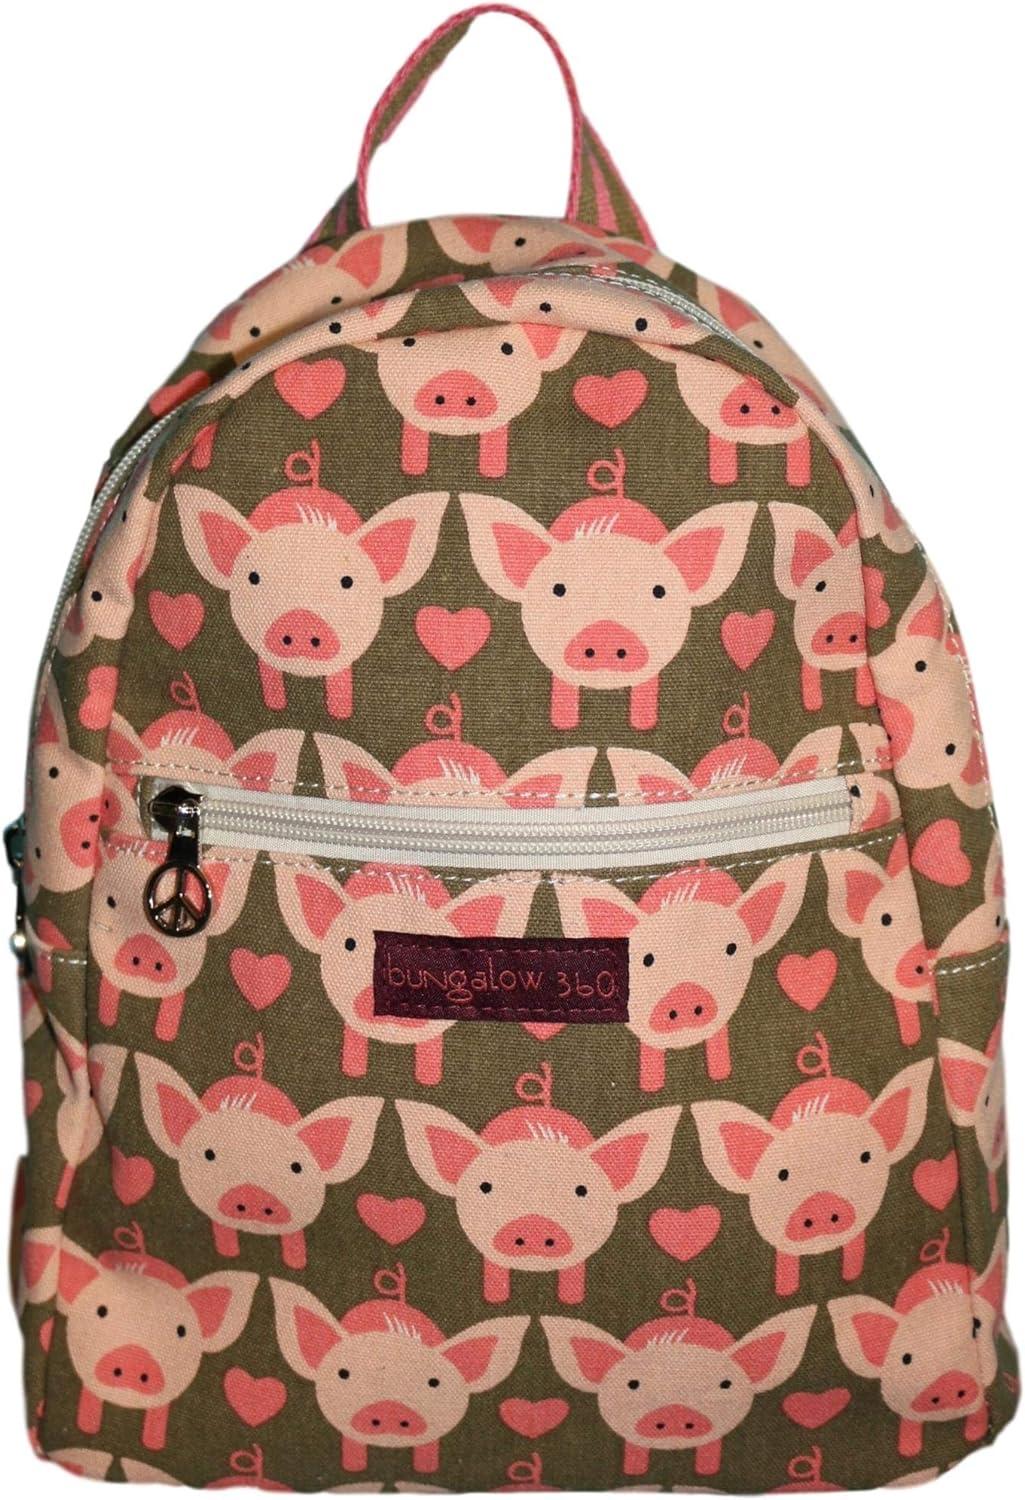 Bungalow 360 Kids Mini Backpack- PIG 80505 Pig